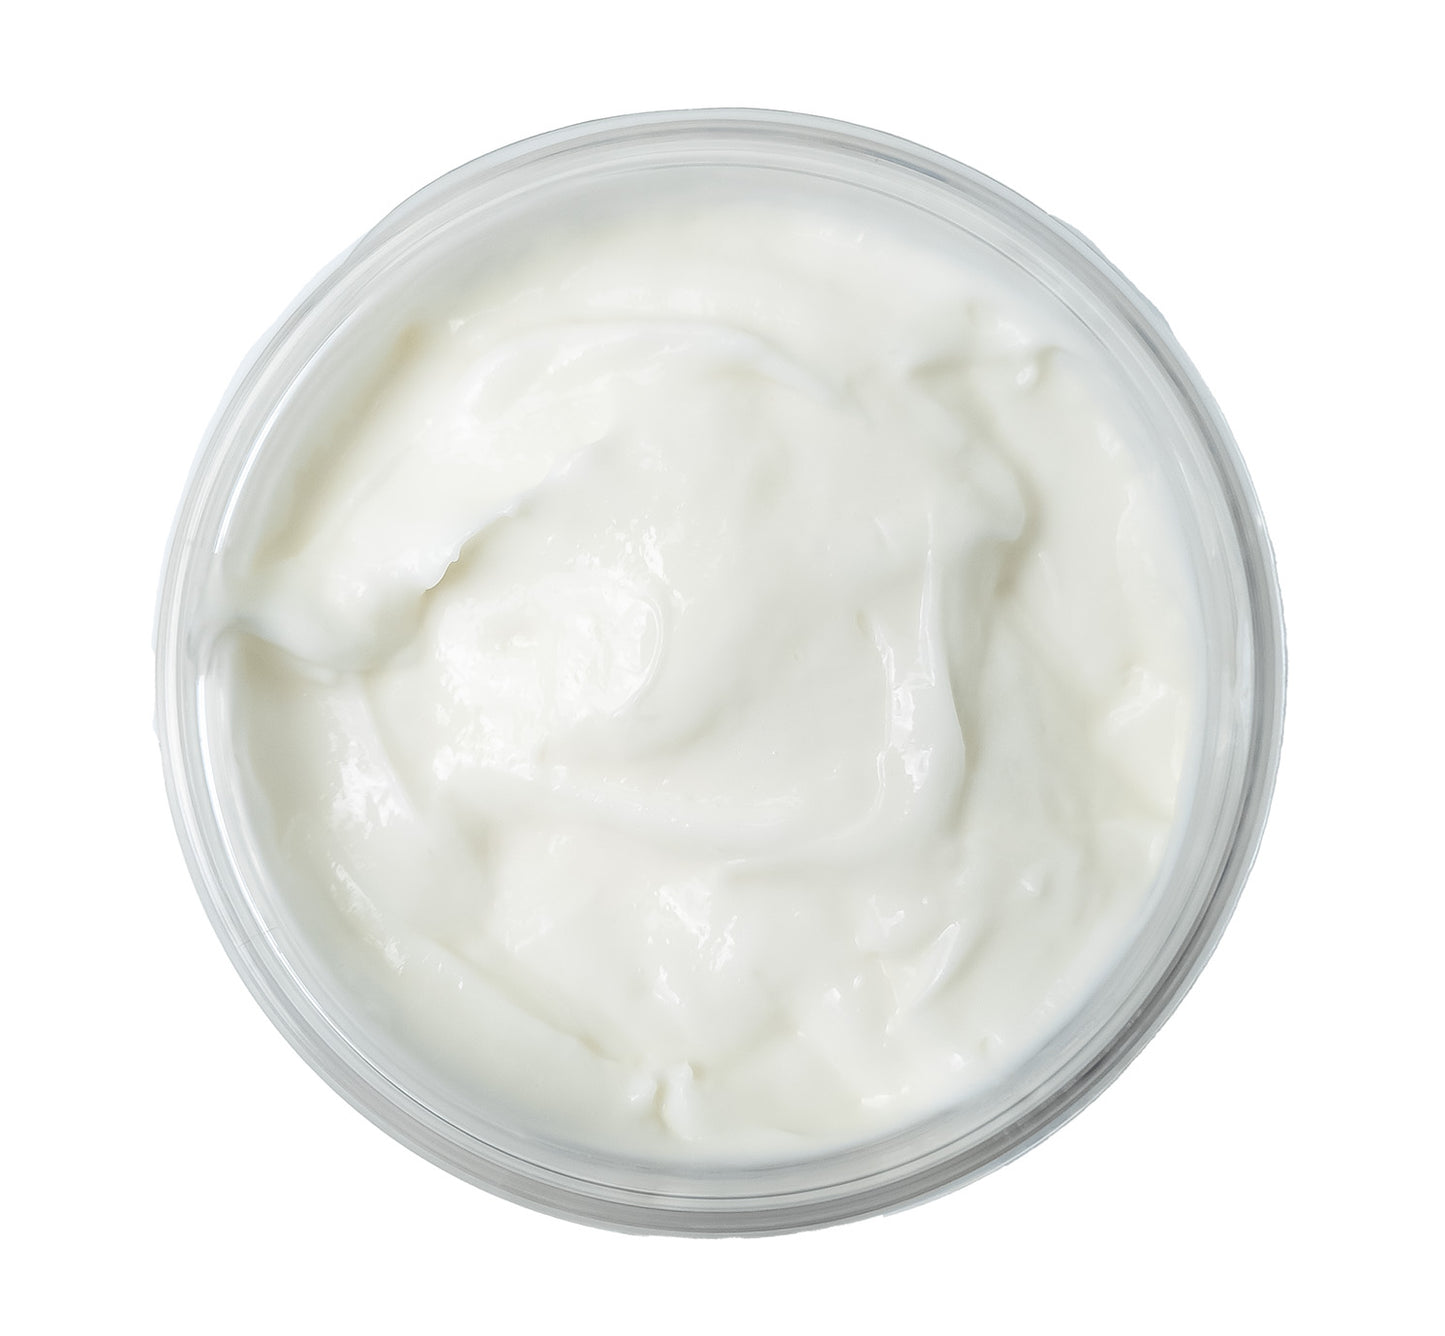 Vitamin Enriched Goat Milk Body Butter Cream